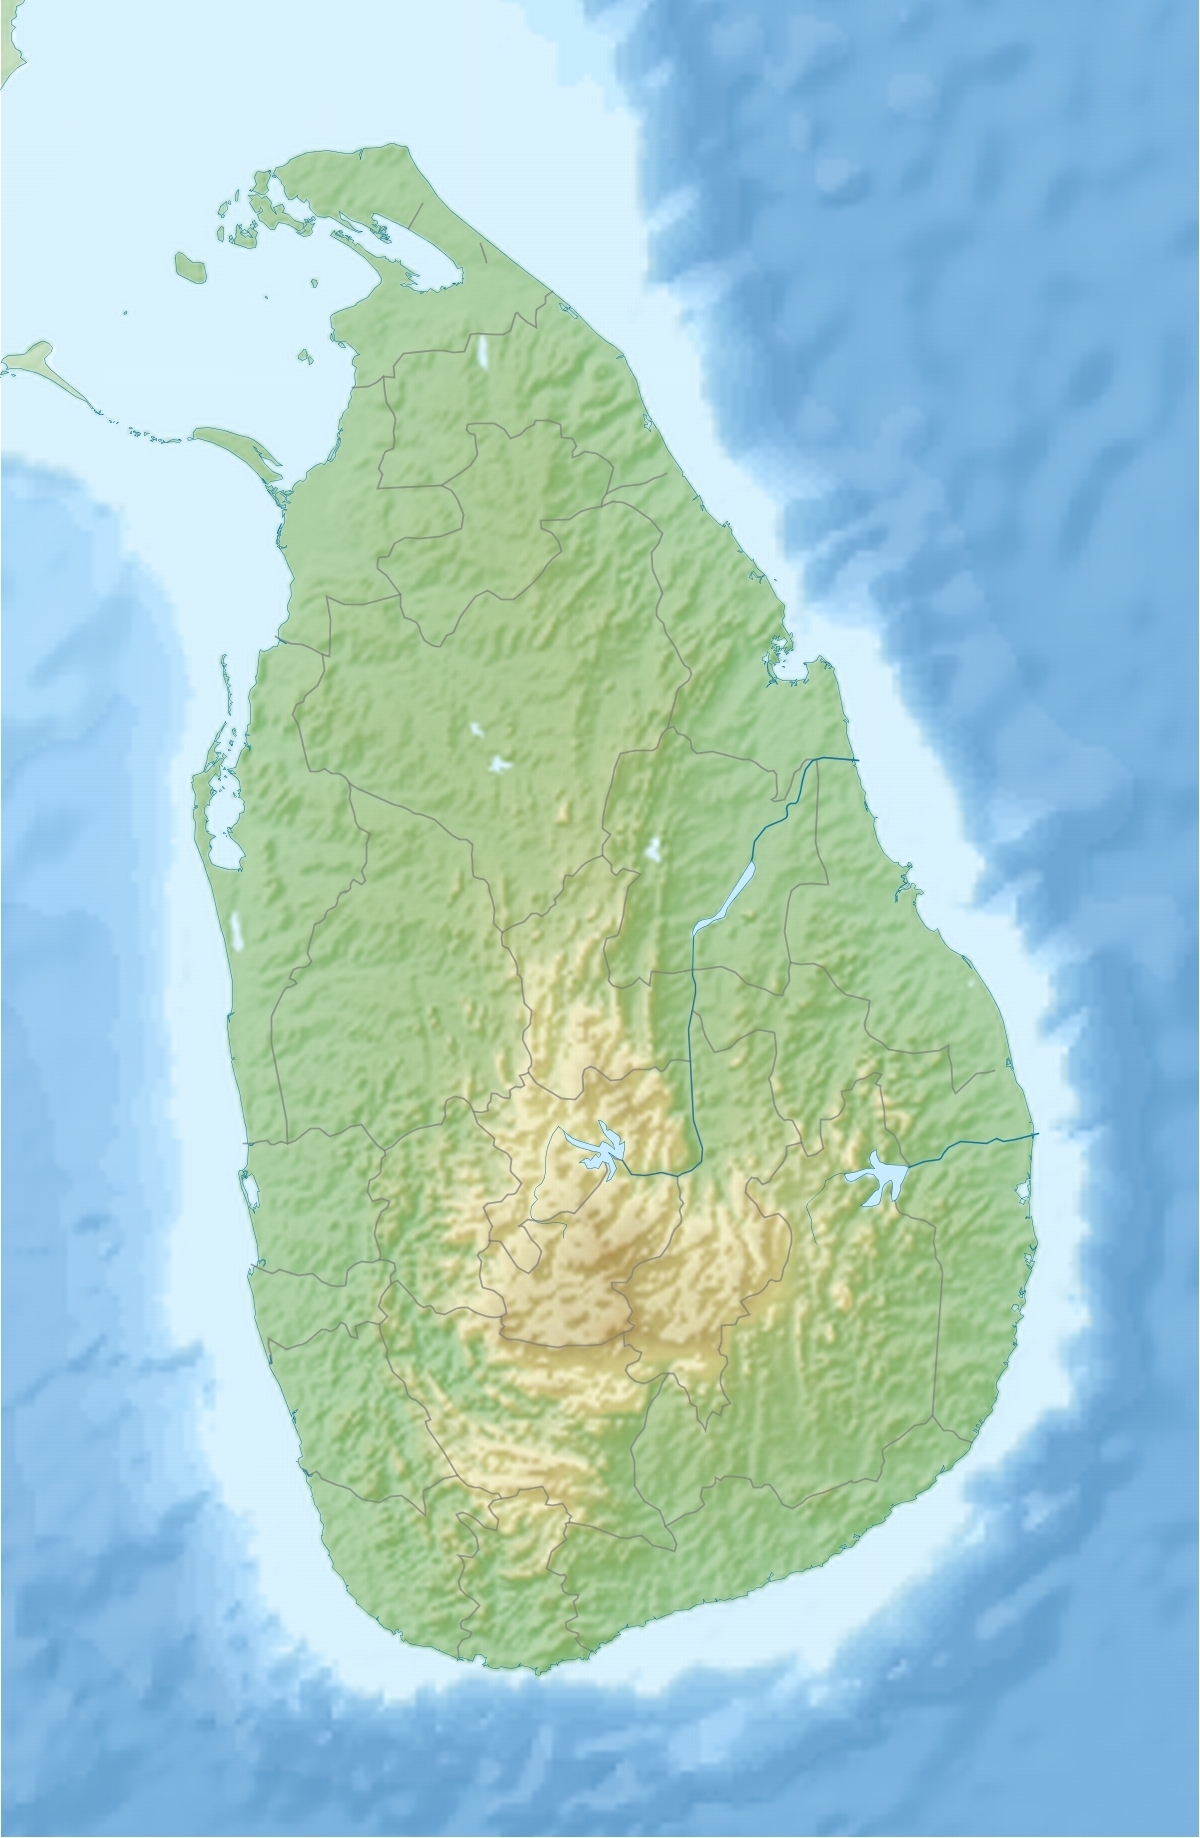 Aluth Oya Massacre - Wikipedia within 18 August 1987 In Sri Lanka